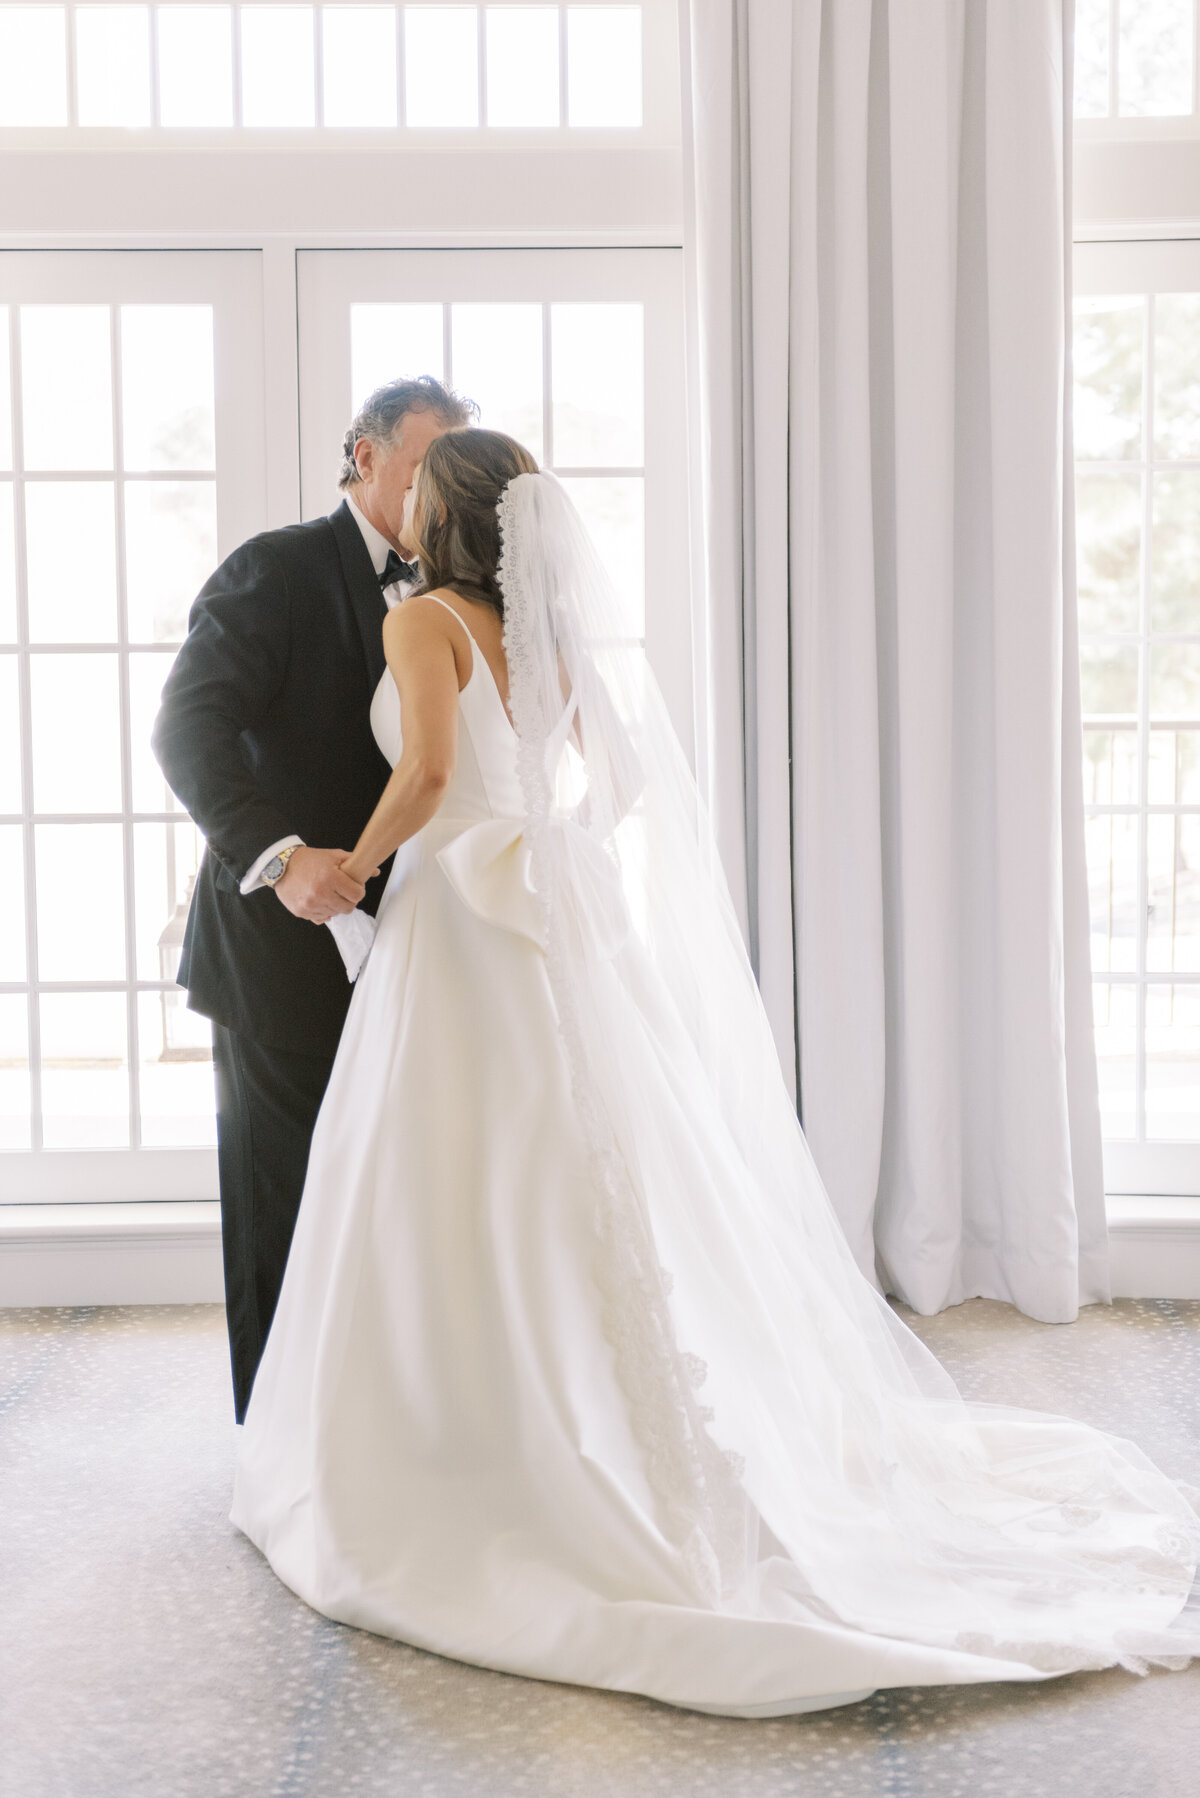 346_Elizabeth & Stokes Wedding_Ports_Lindsay Ott Photography